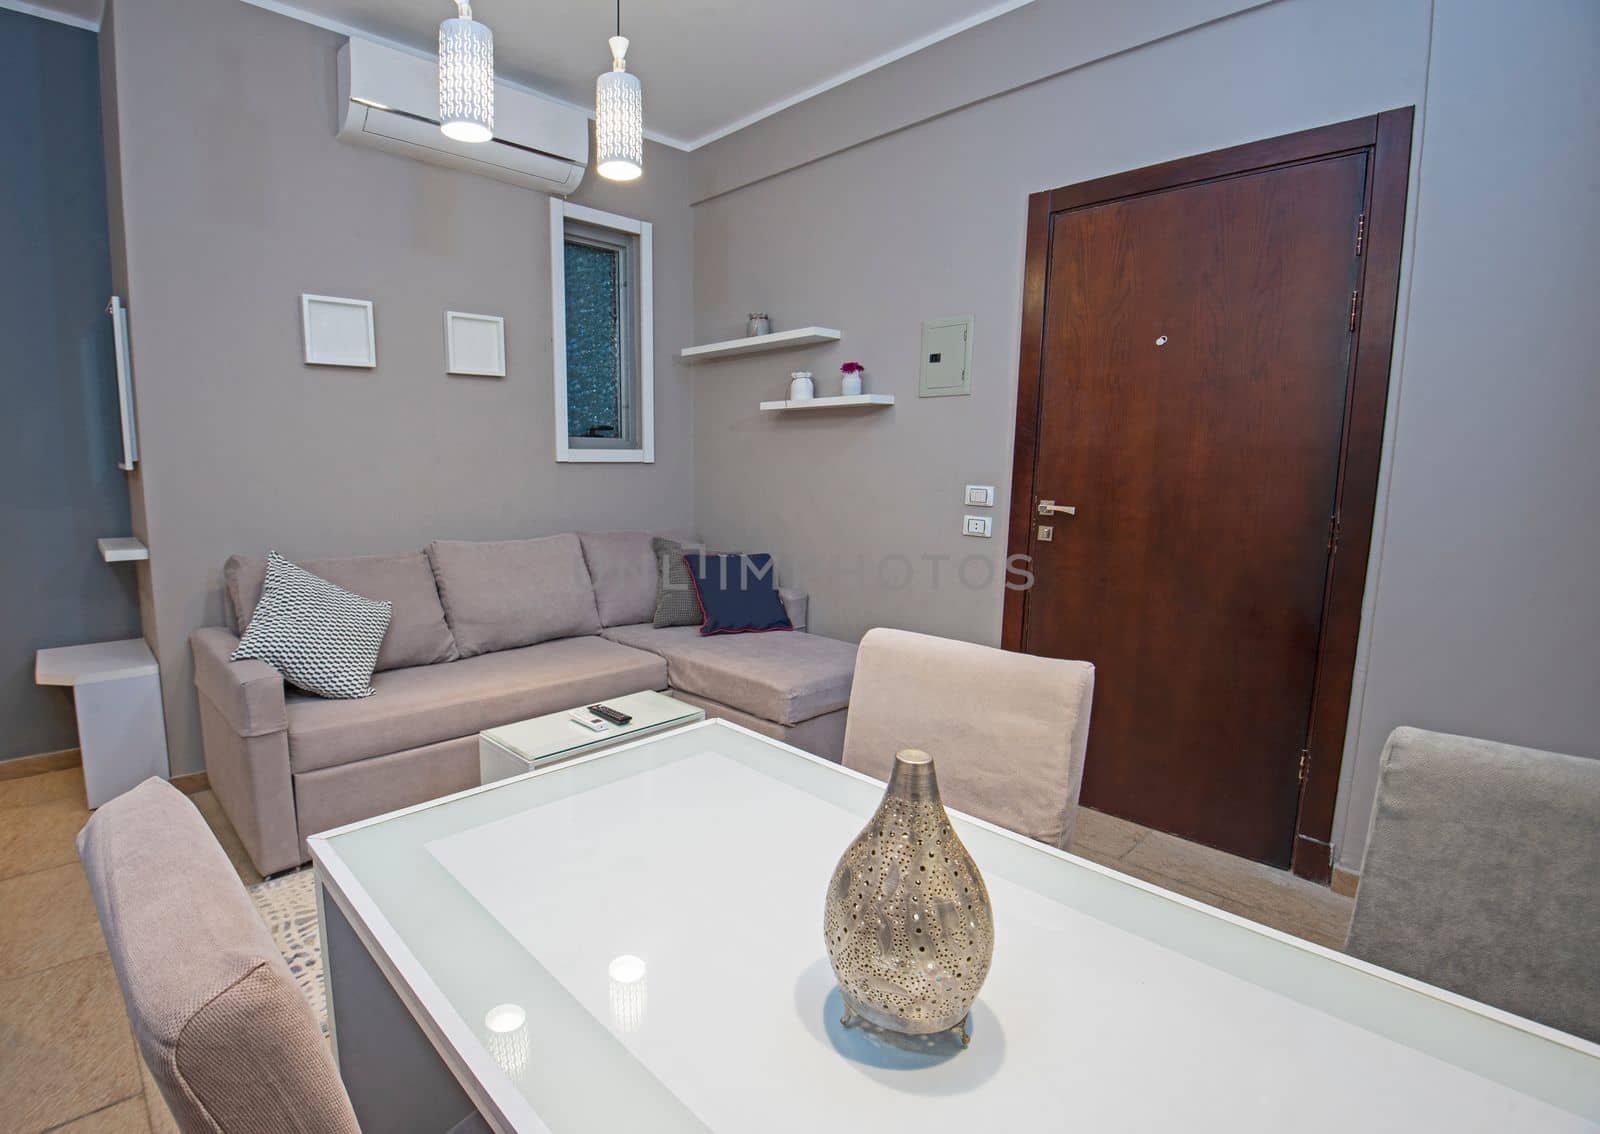 Interior design of luxury apartment living room by paulvinten